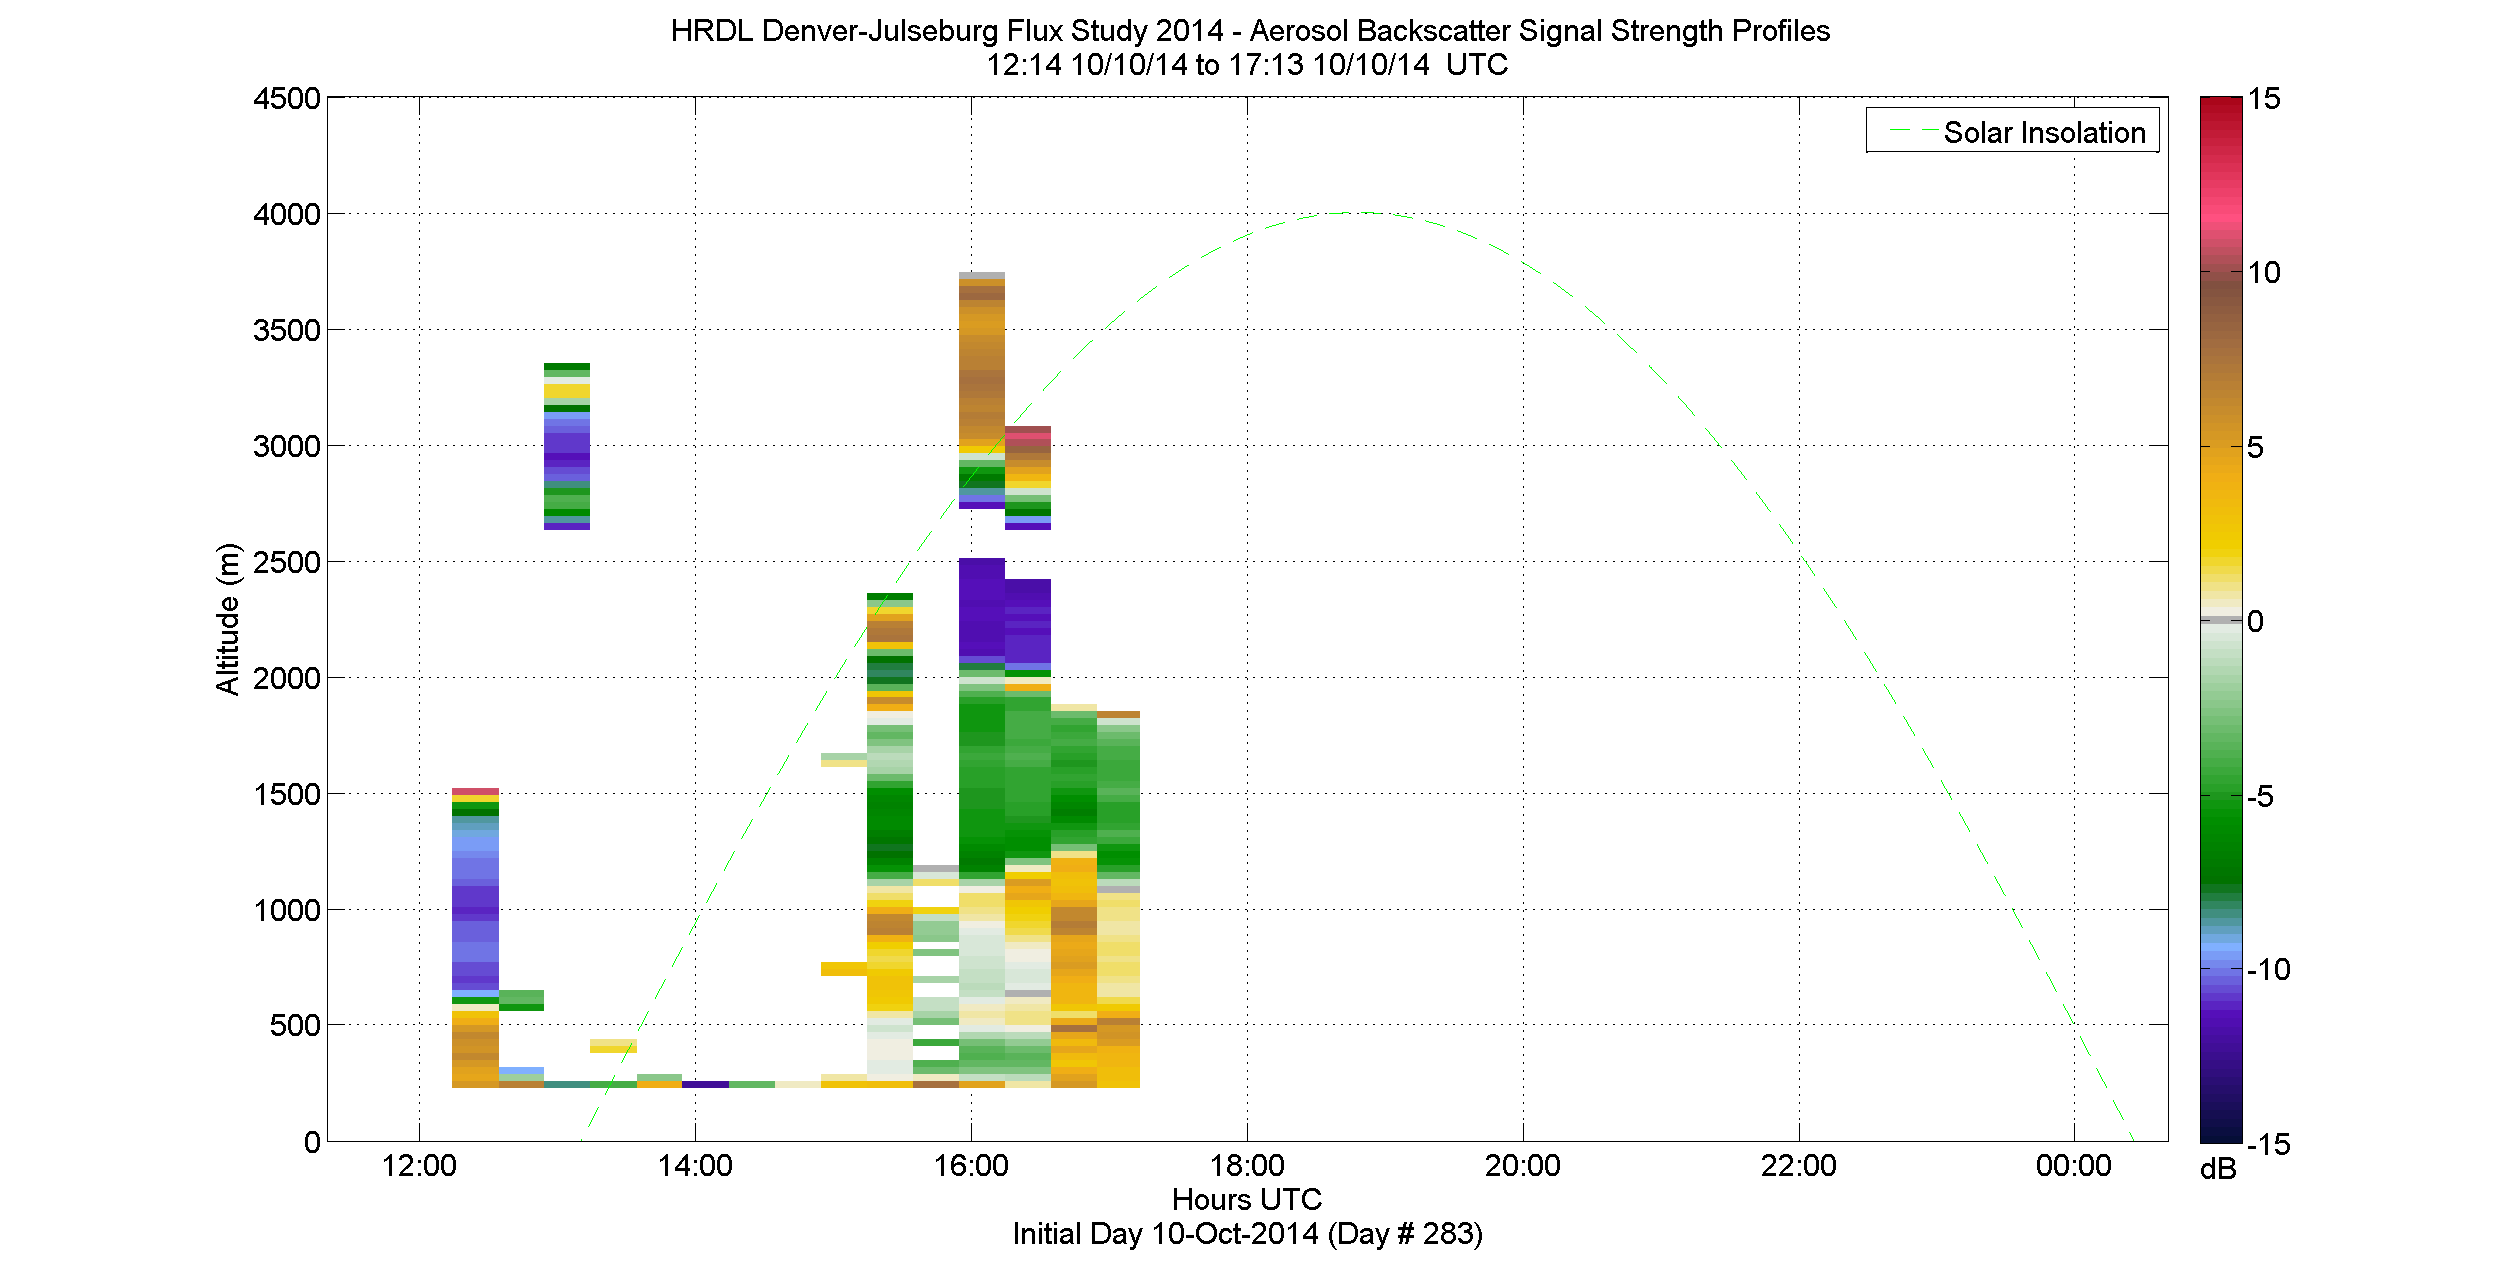 HRDL vertical intensity profile - October 10 pm